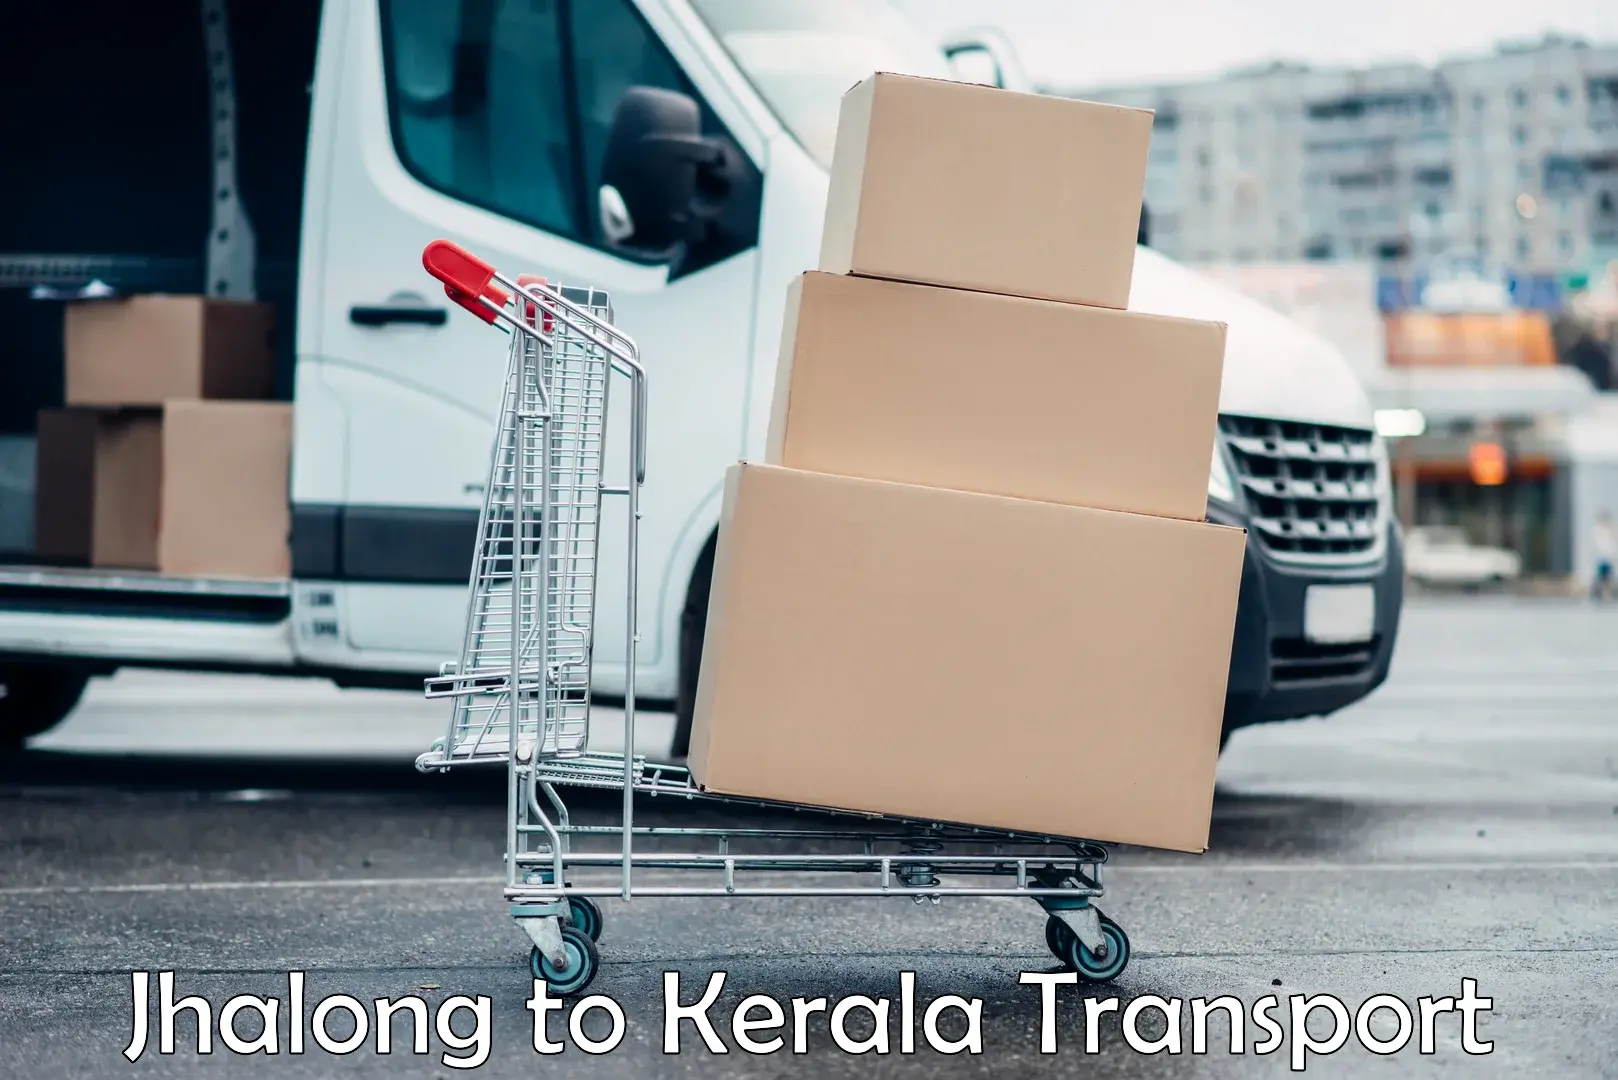 Online transport booking Jhalong to Kochi